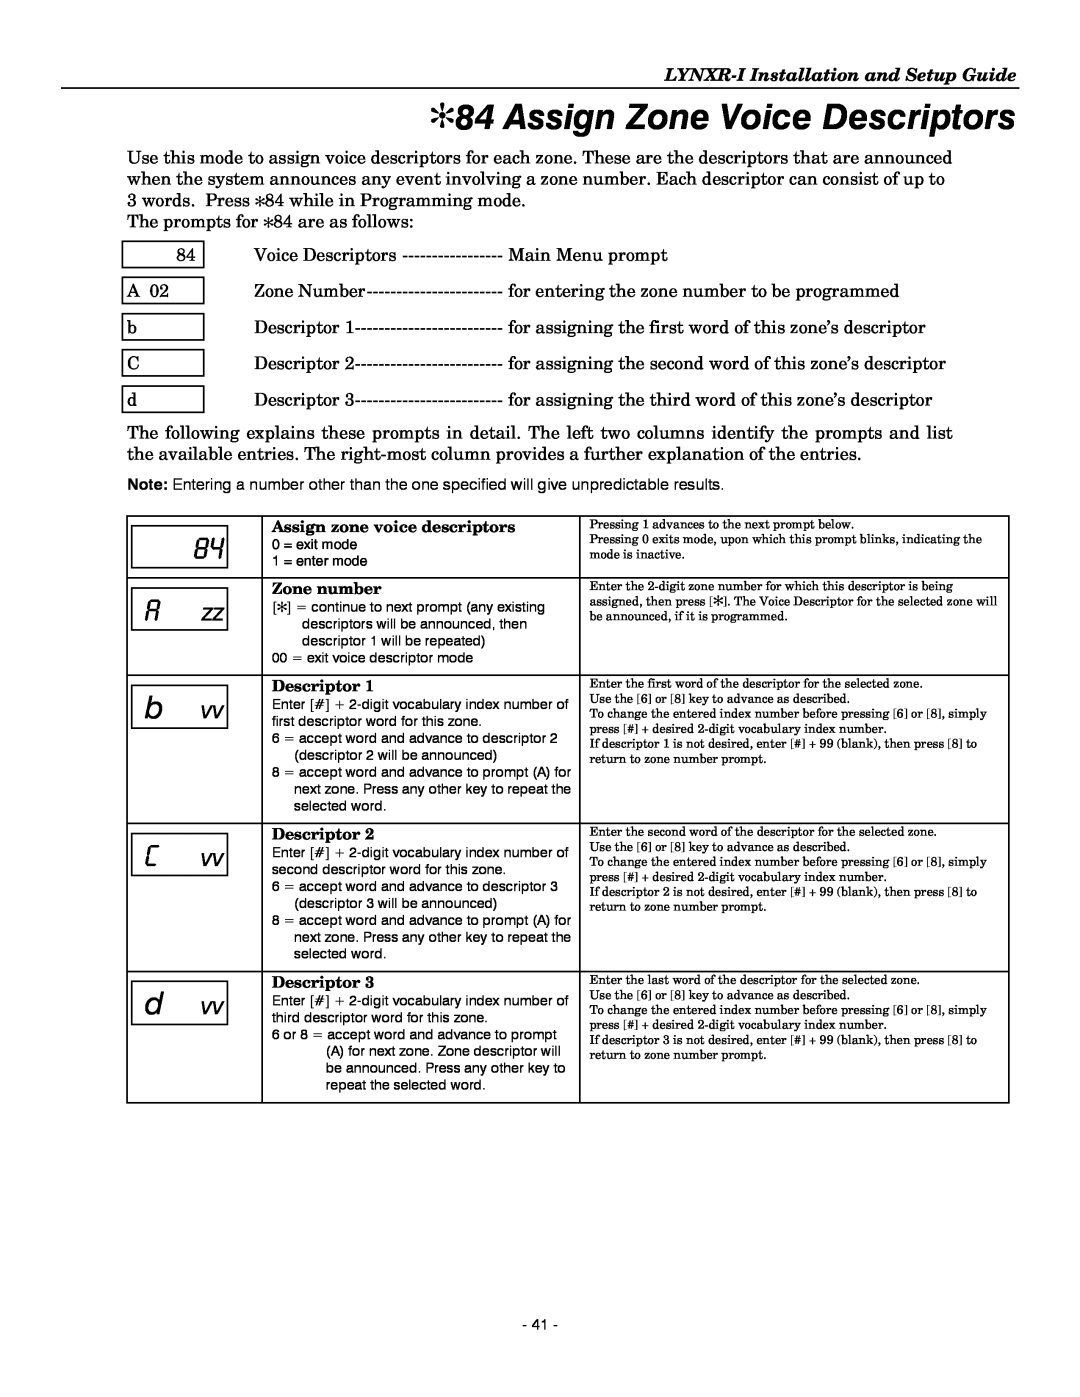 Honeywell K14114 3/06 Rev.B setup guide Assign Zone Voice Descriptors, LYNXR-IInstallation and Setup Guide 